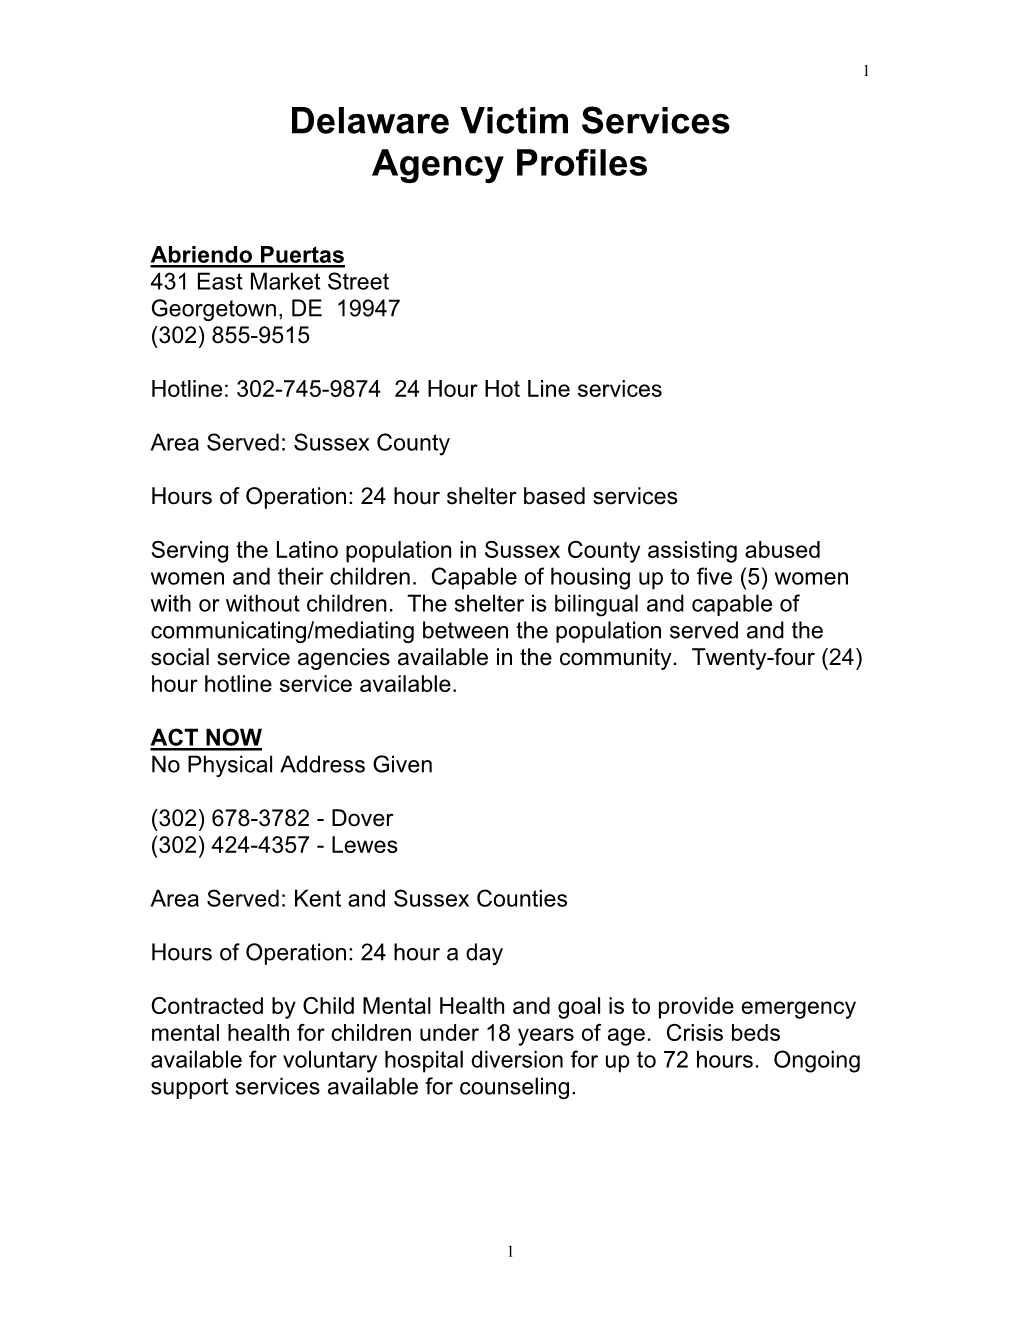 Agency Profiles2